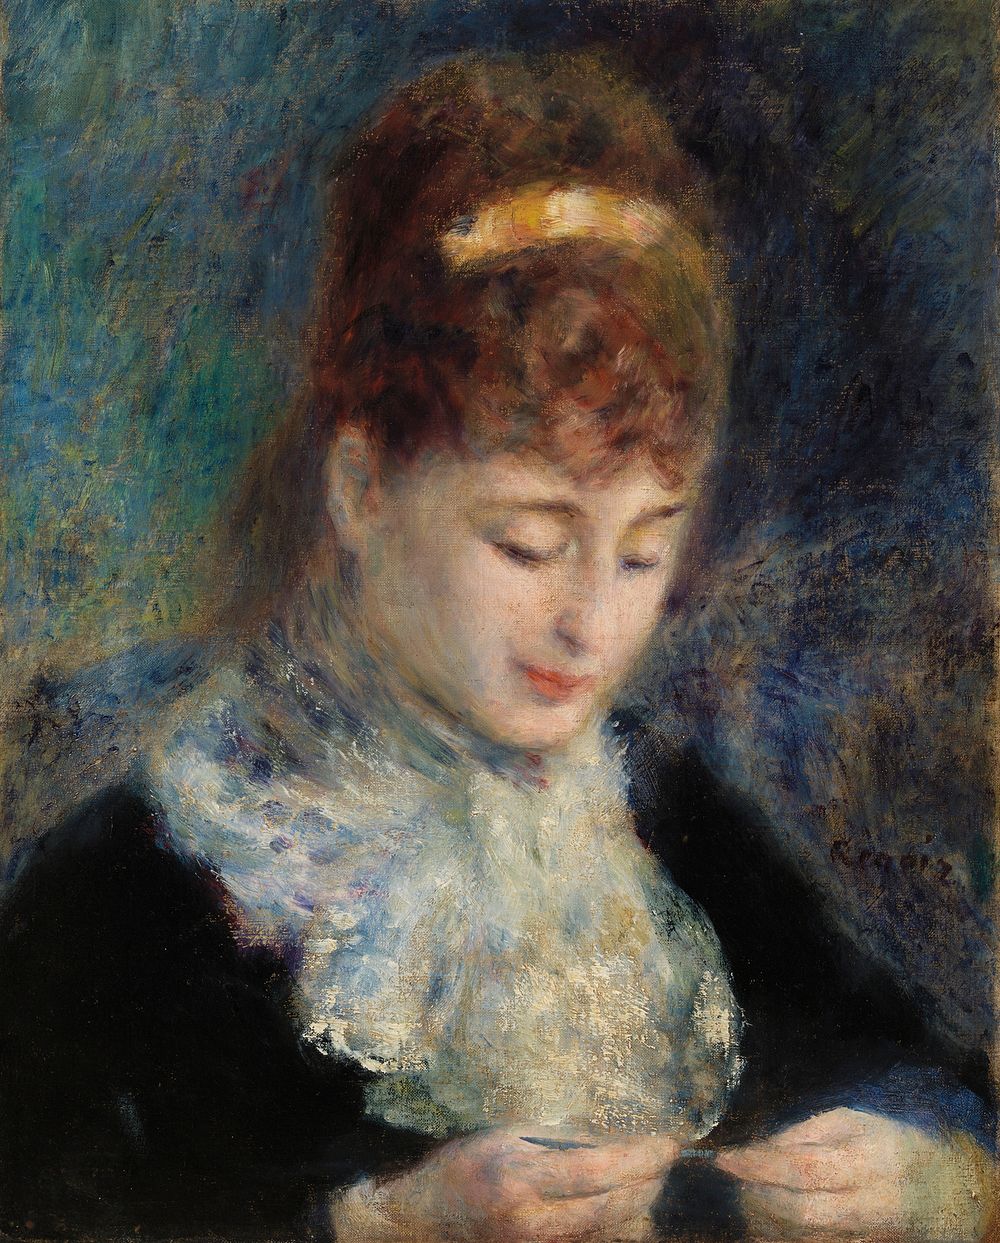 Woman Crocheting (Femme faisant du crochet) by Pierre Auguste Renoir